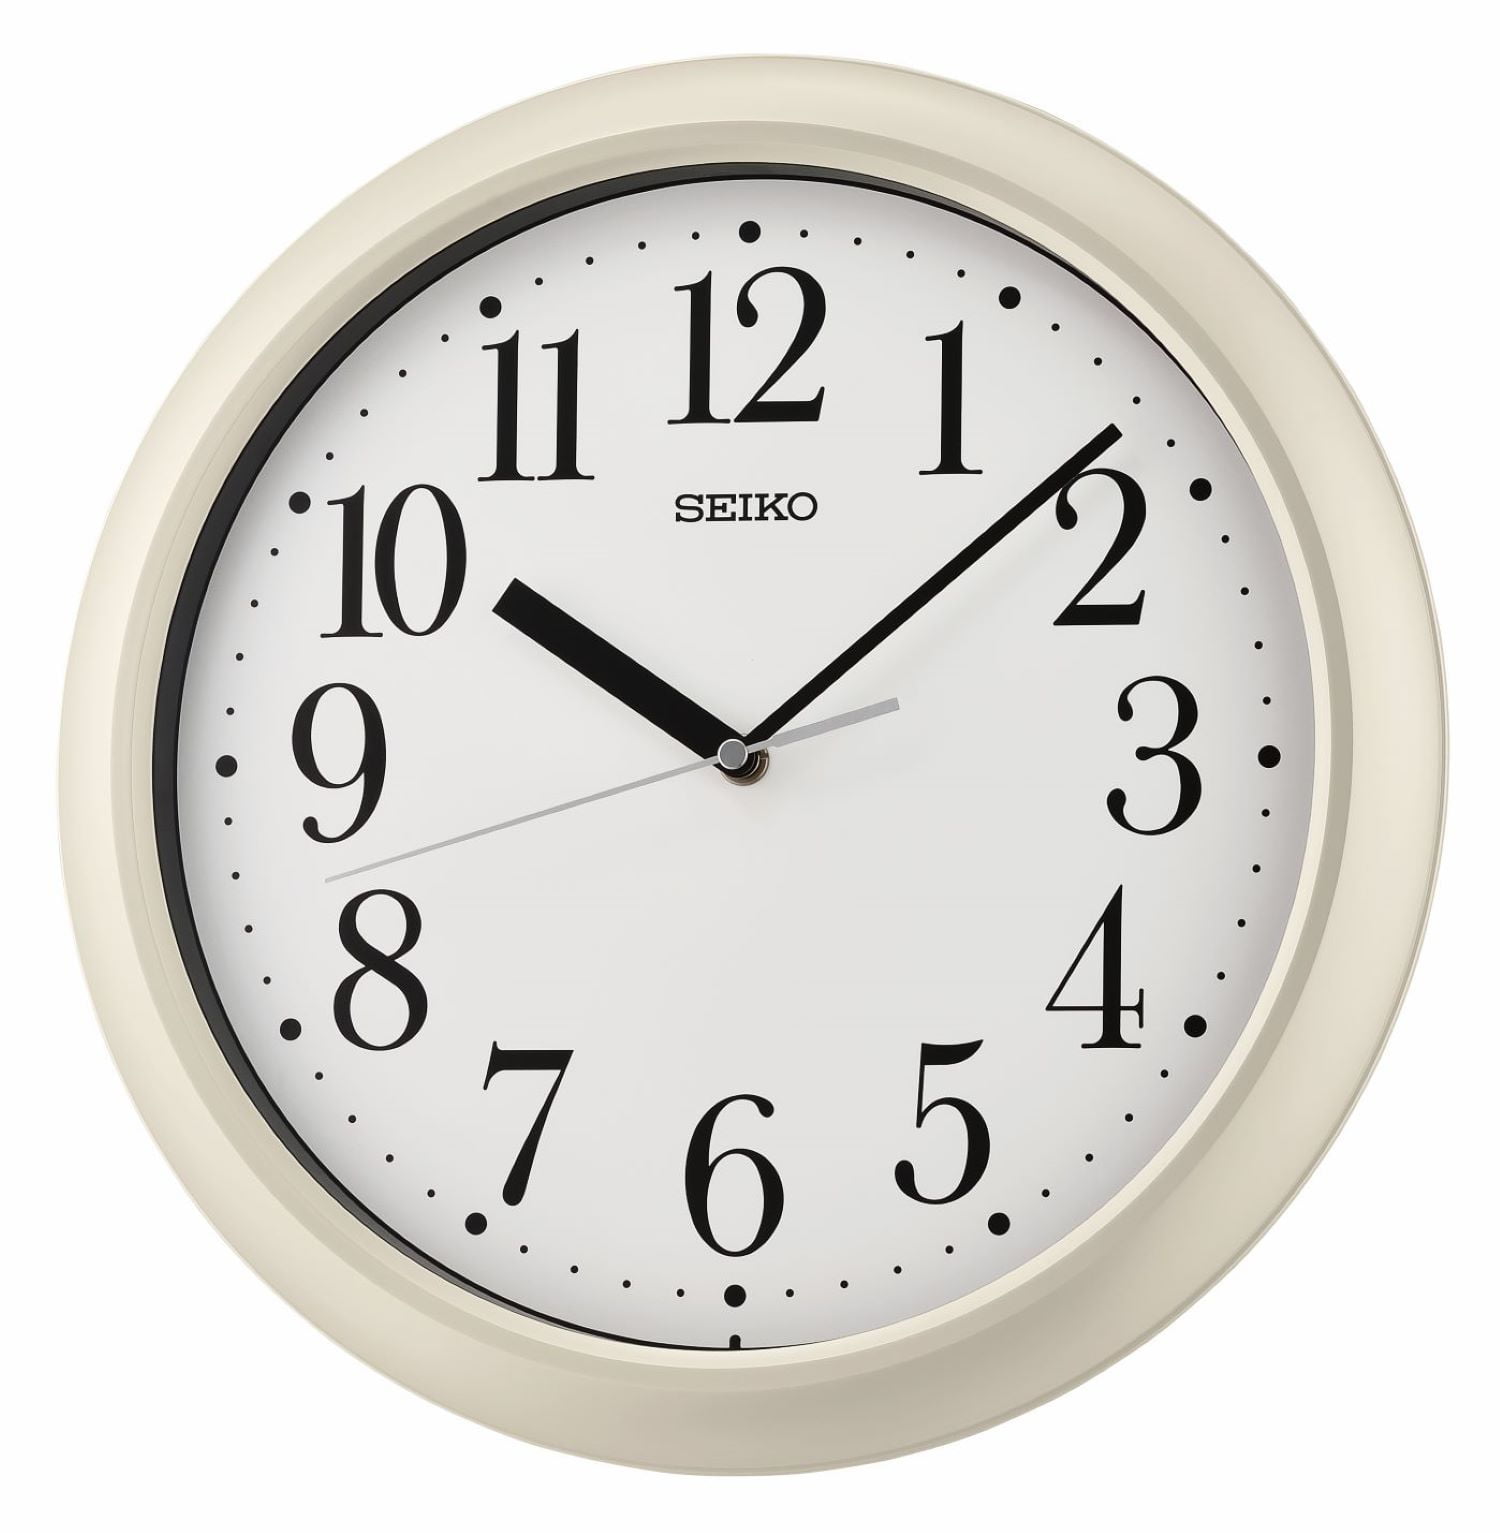 SEIKO 12 Inch Round Wood Classic Wall Clock, White,Brown